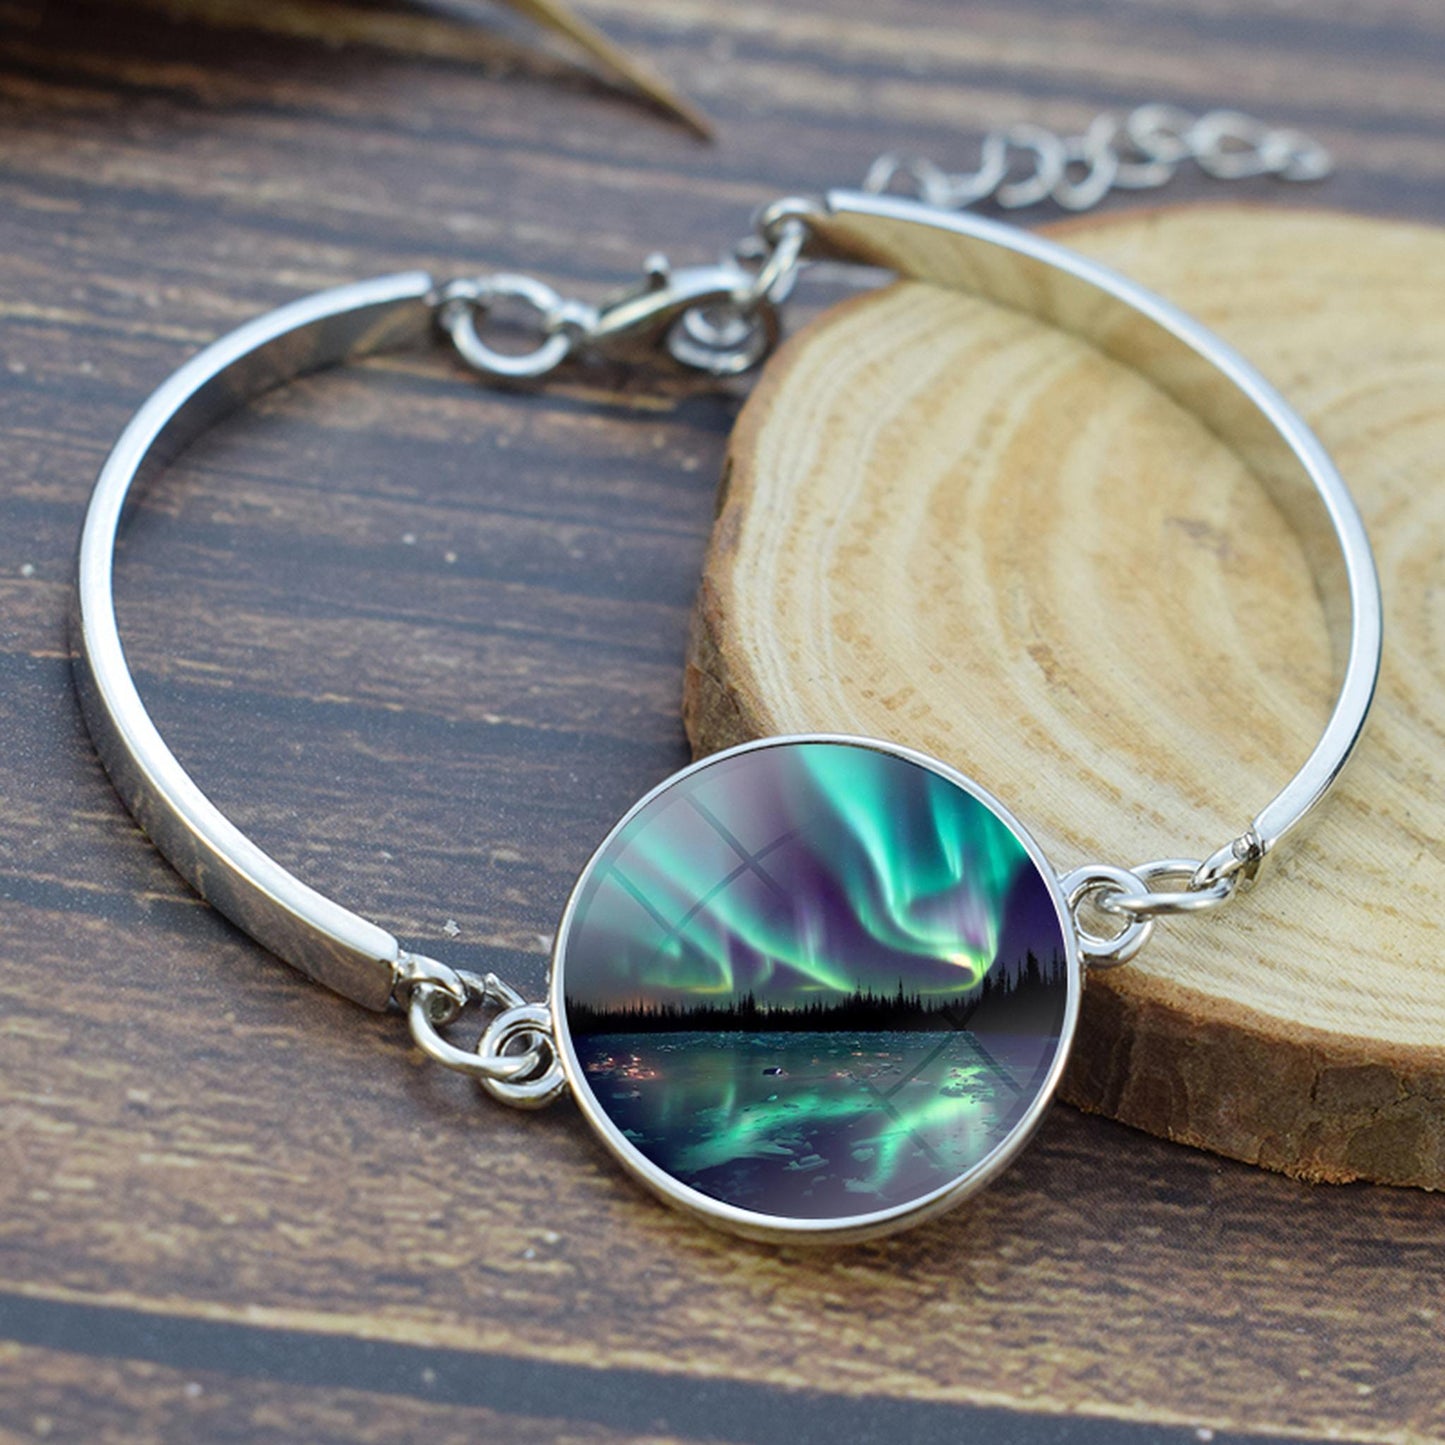 Unique Aurora Borealis Bangle Bracelet - Northern Light Jewelry - Glass Cabochon Silver Plated Bracelet - Perfect Aurora Lovers Gift 1